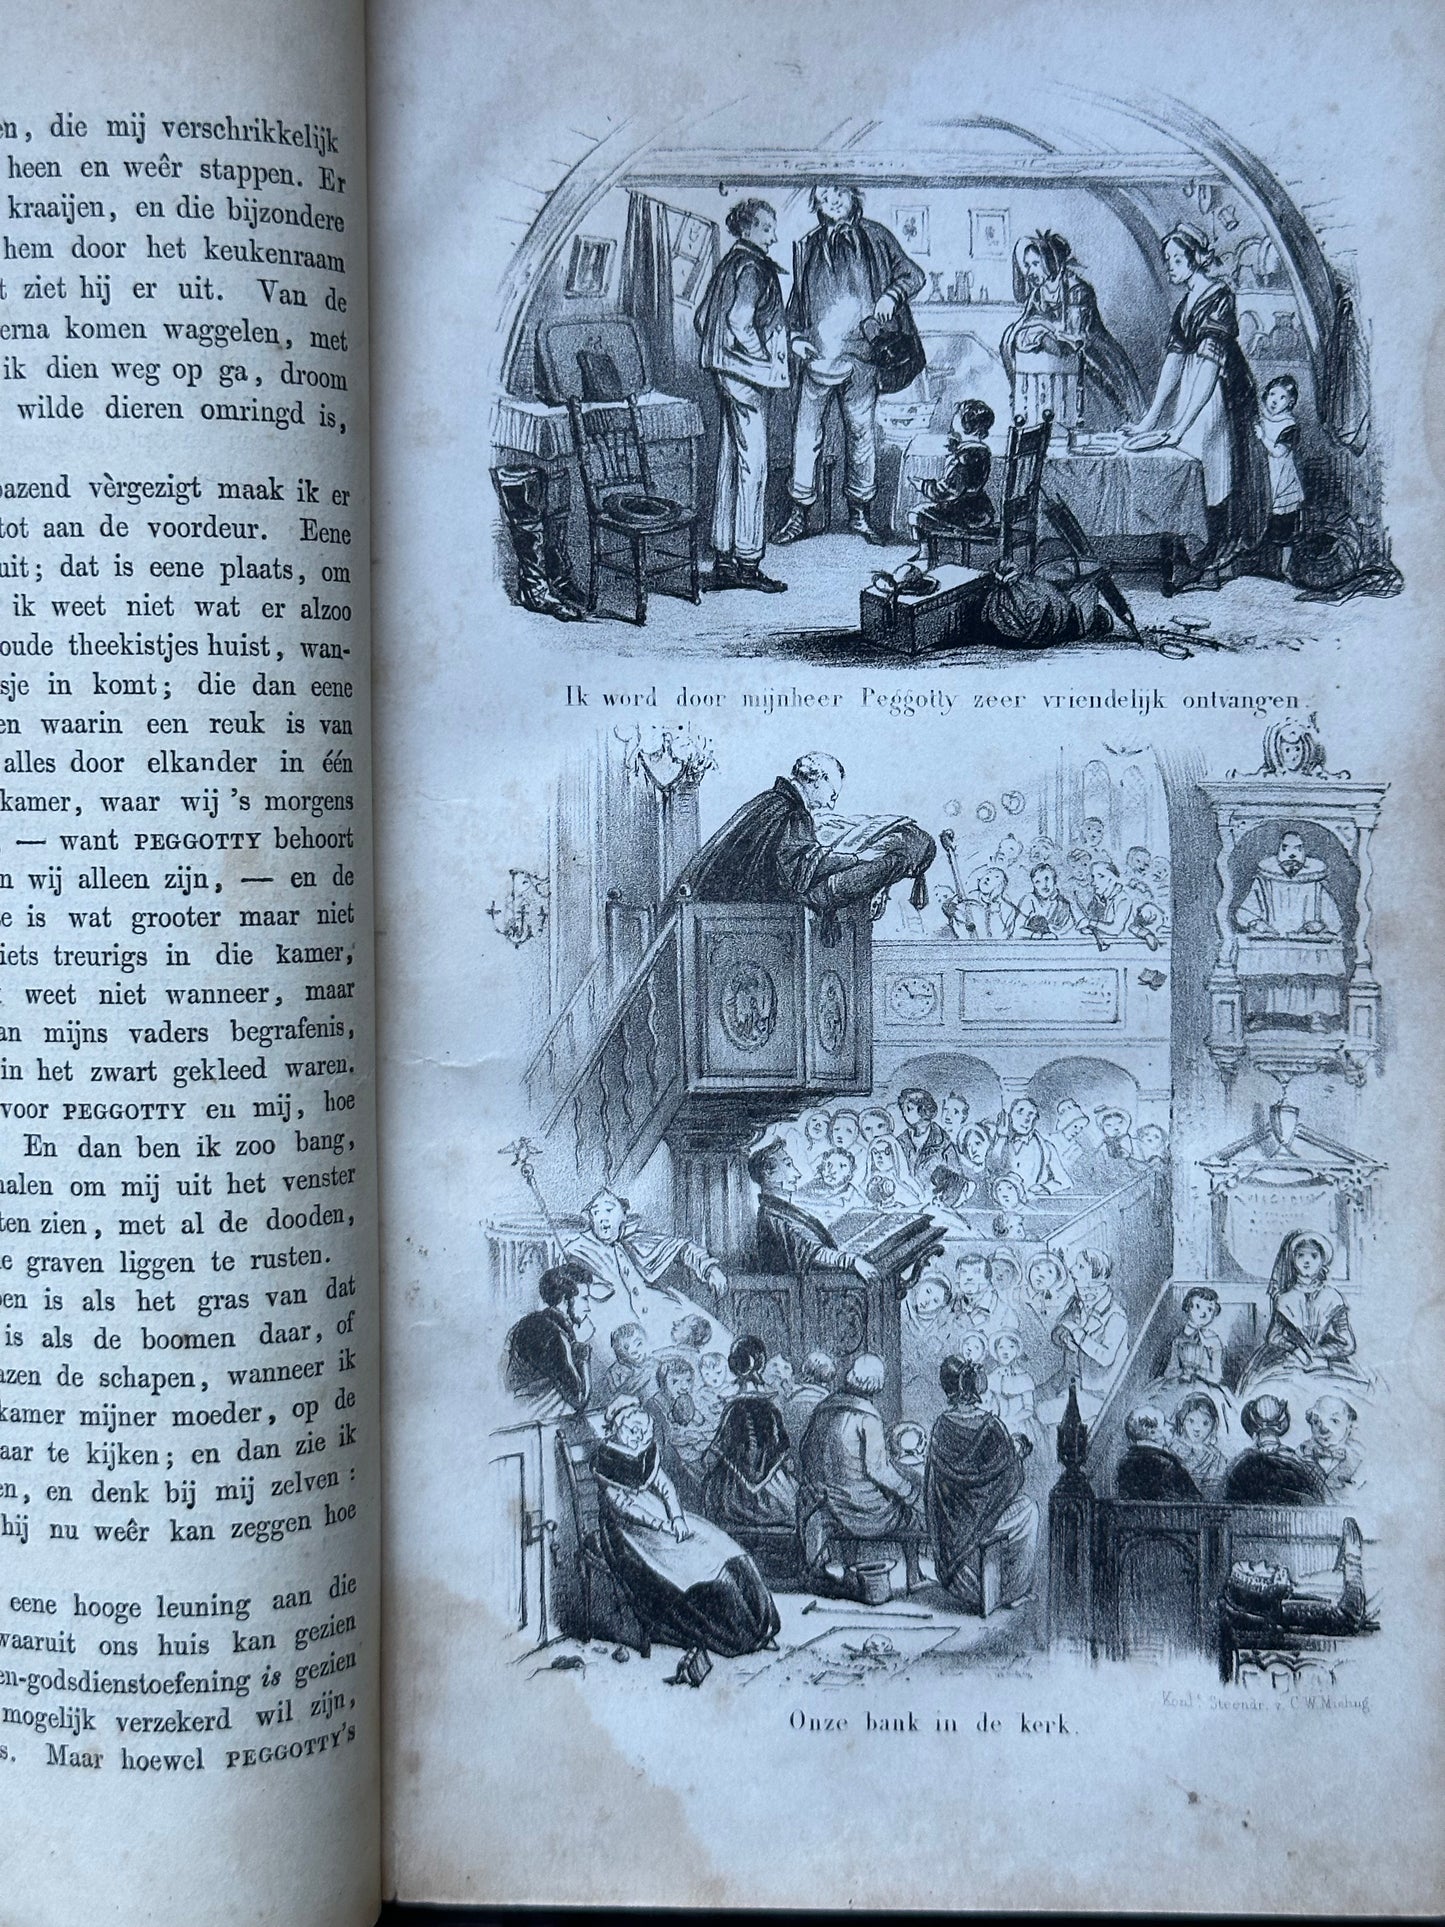 1850 Dutch Edition "David Copperfield"